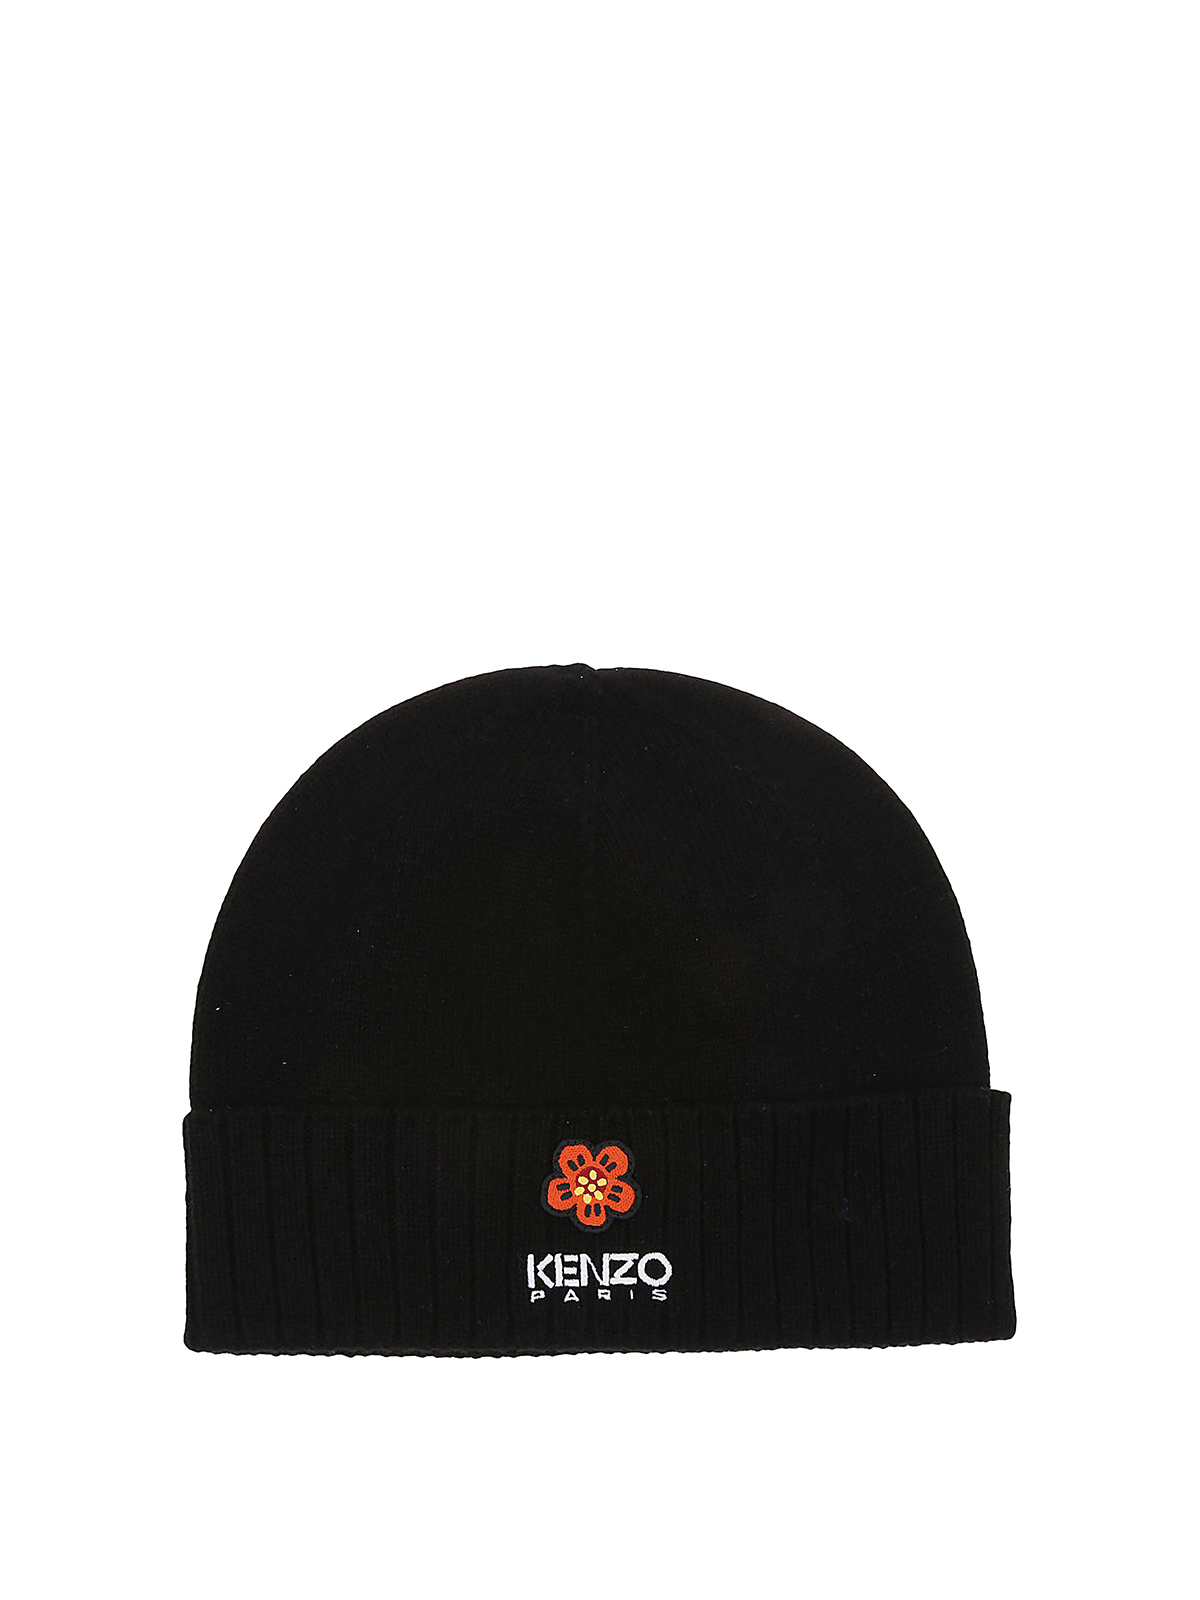 Hats & caps Kenzo - Hat - FD68BU191KWB99J | Shop online at THEBS 